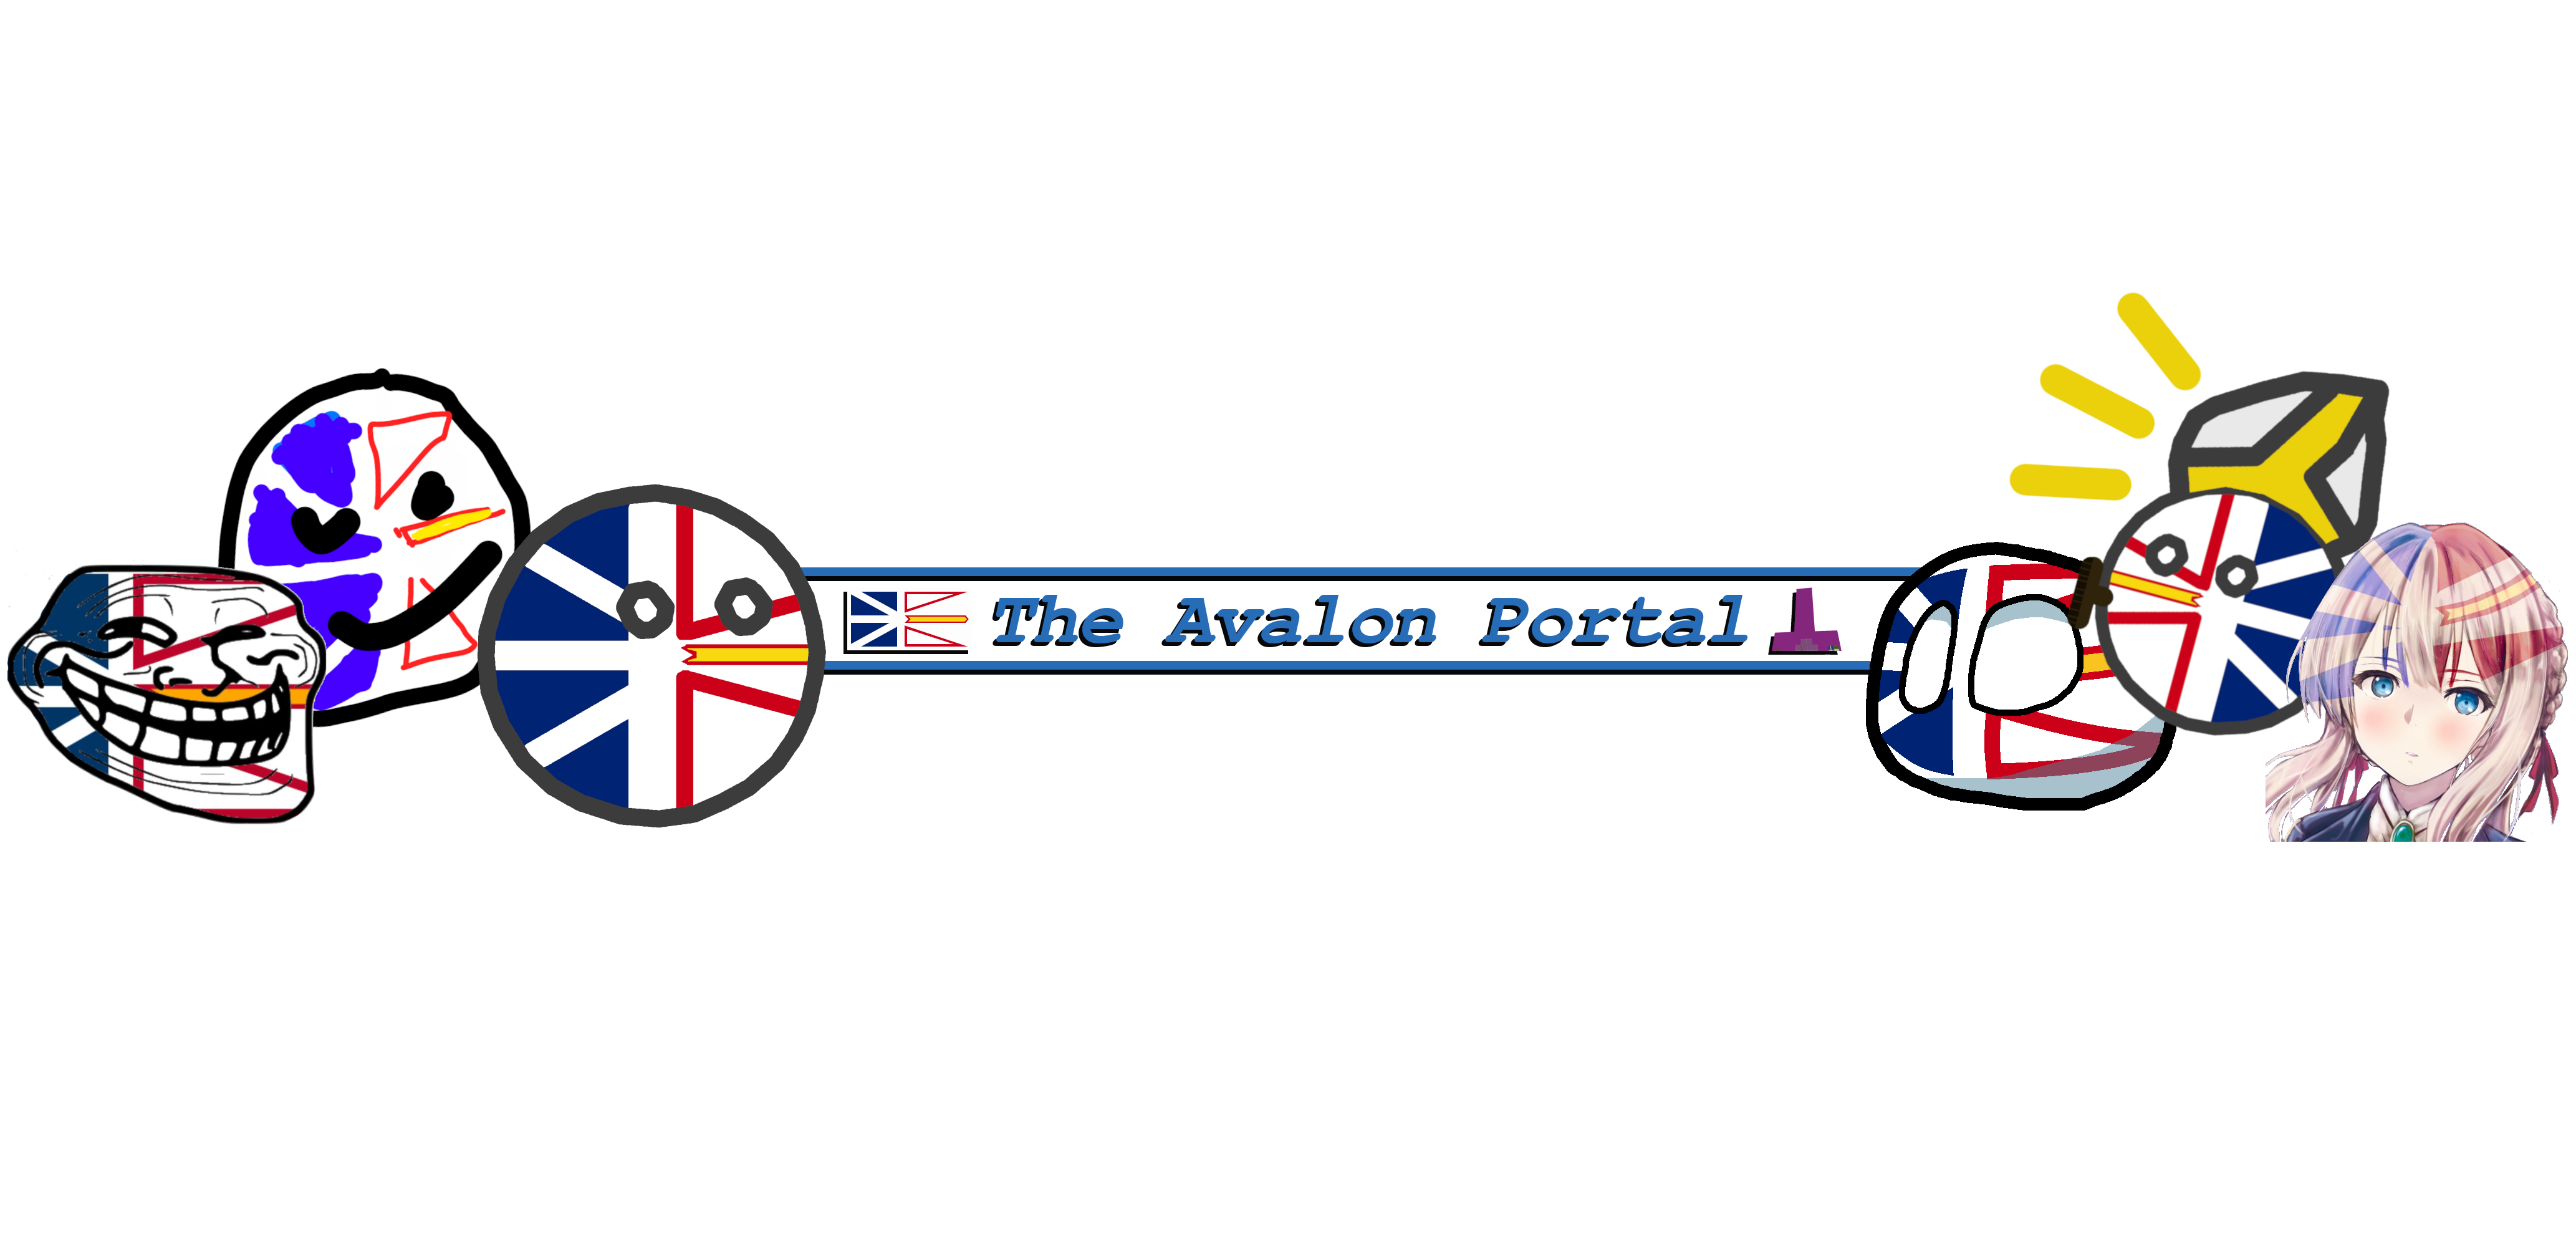 The avalon portal2.png